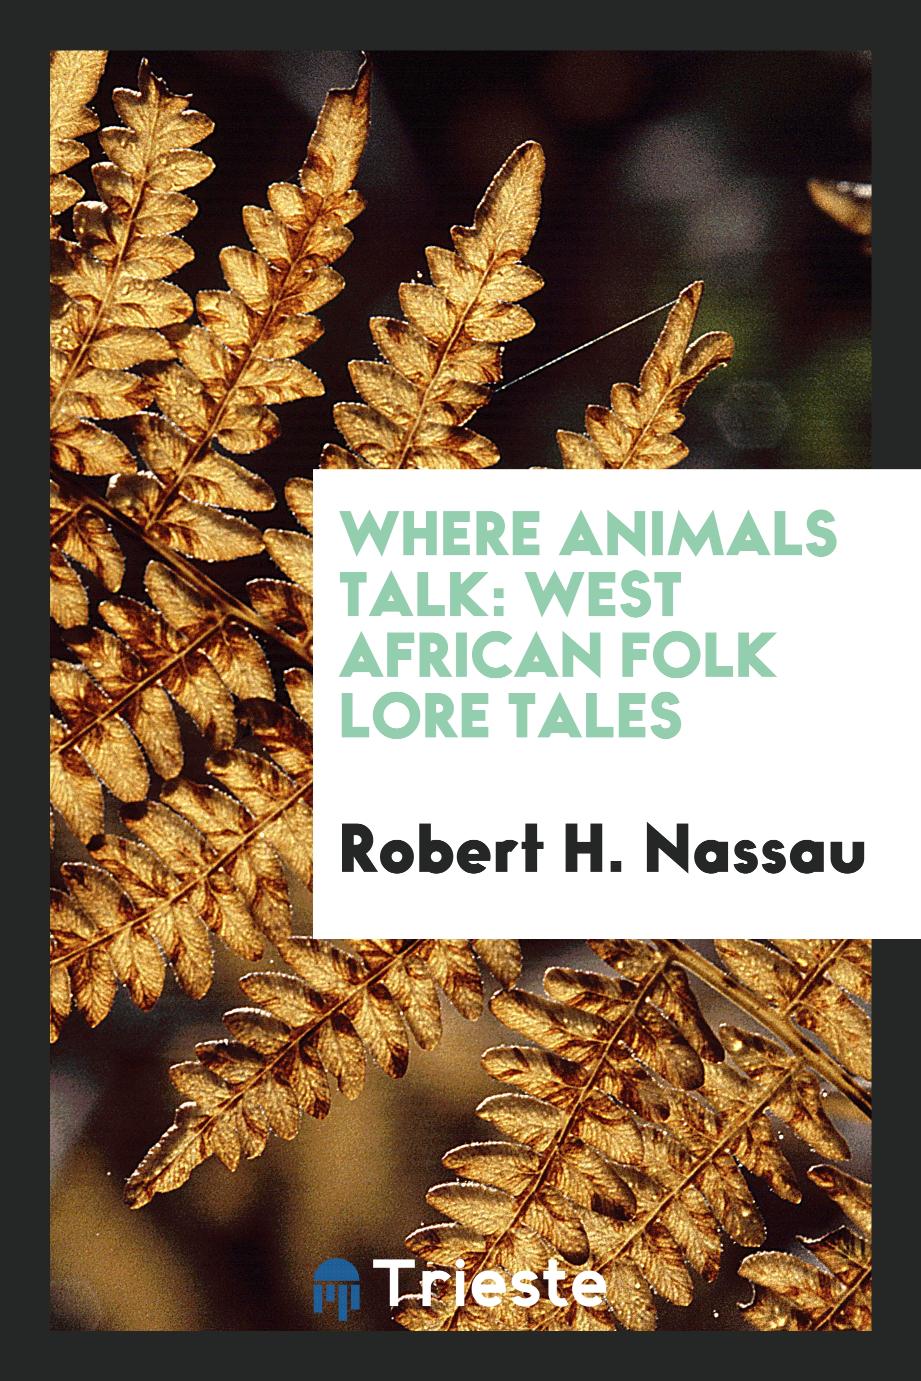 Where animals talk: West African folk lore tales